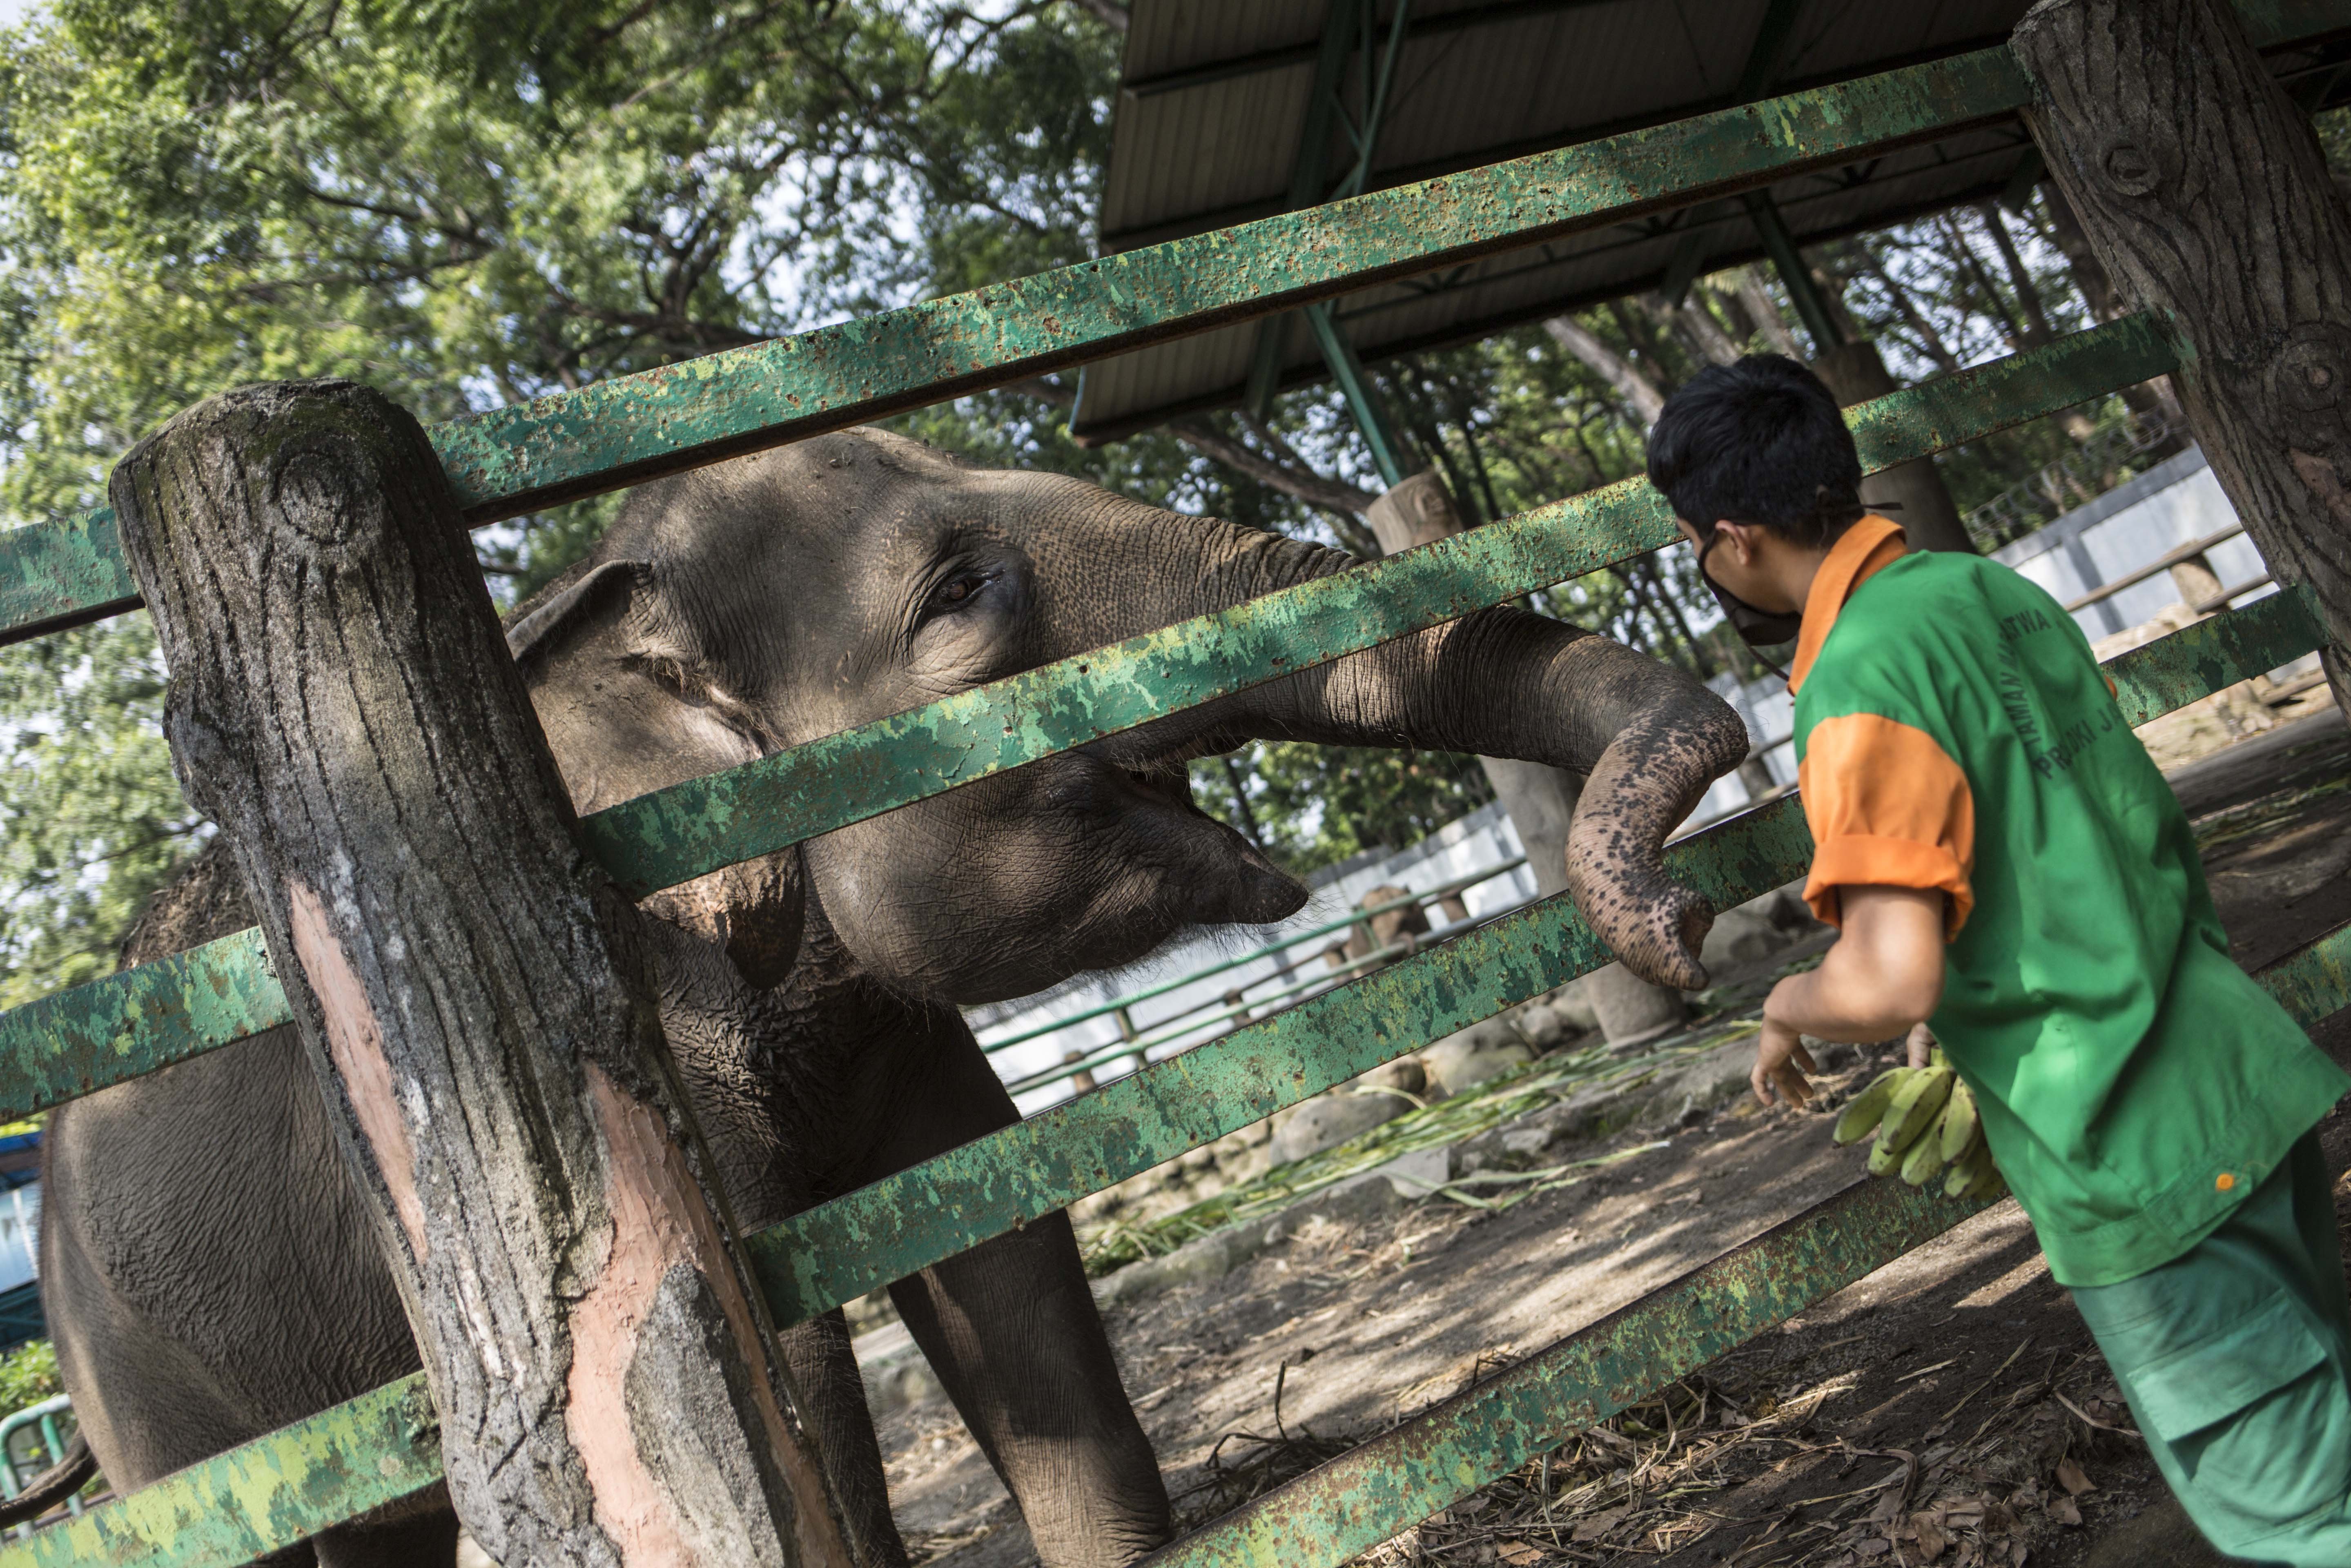 Petugas memberi makan gajah di Taman Margasatwa Ragunan, Jakarta Selatan (22/4/2020). Satwa-satwa di Taman Margasatwa Ragunan terlihat lebih tenang dan fresh sejak penutupan lokasi mulai 14 Maret untuk mencegah penyebaran virus corona COVID-19.